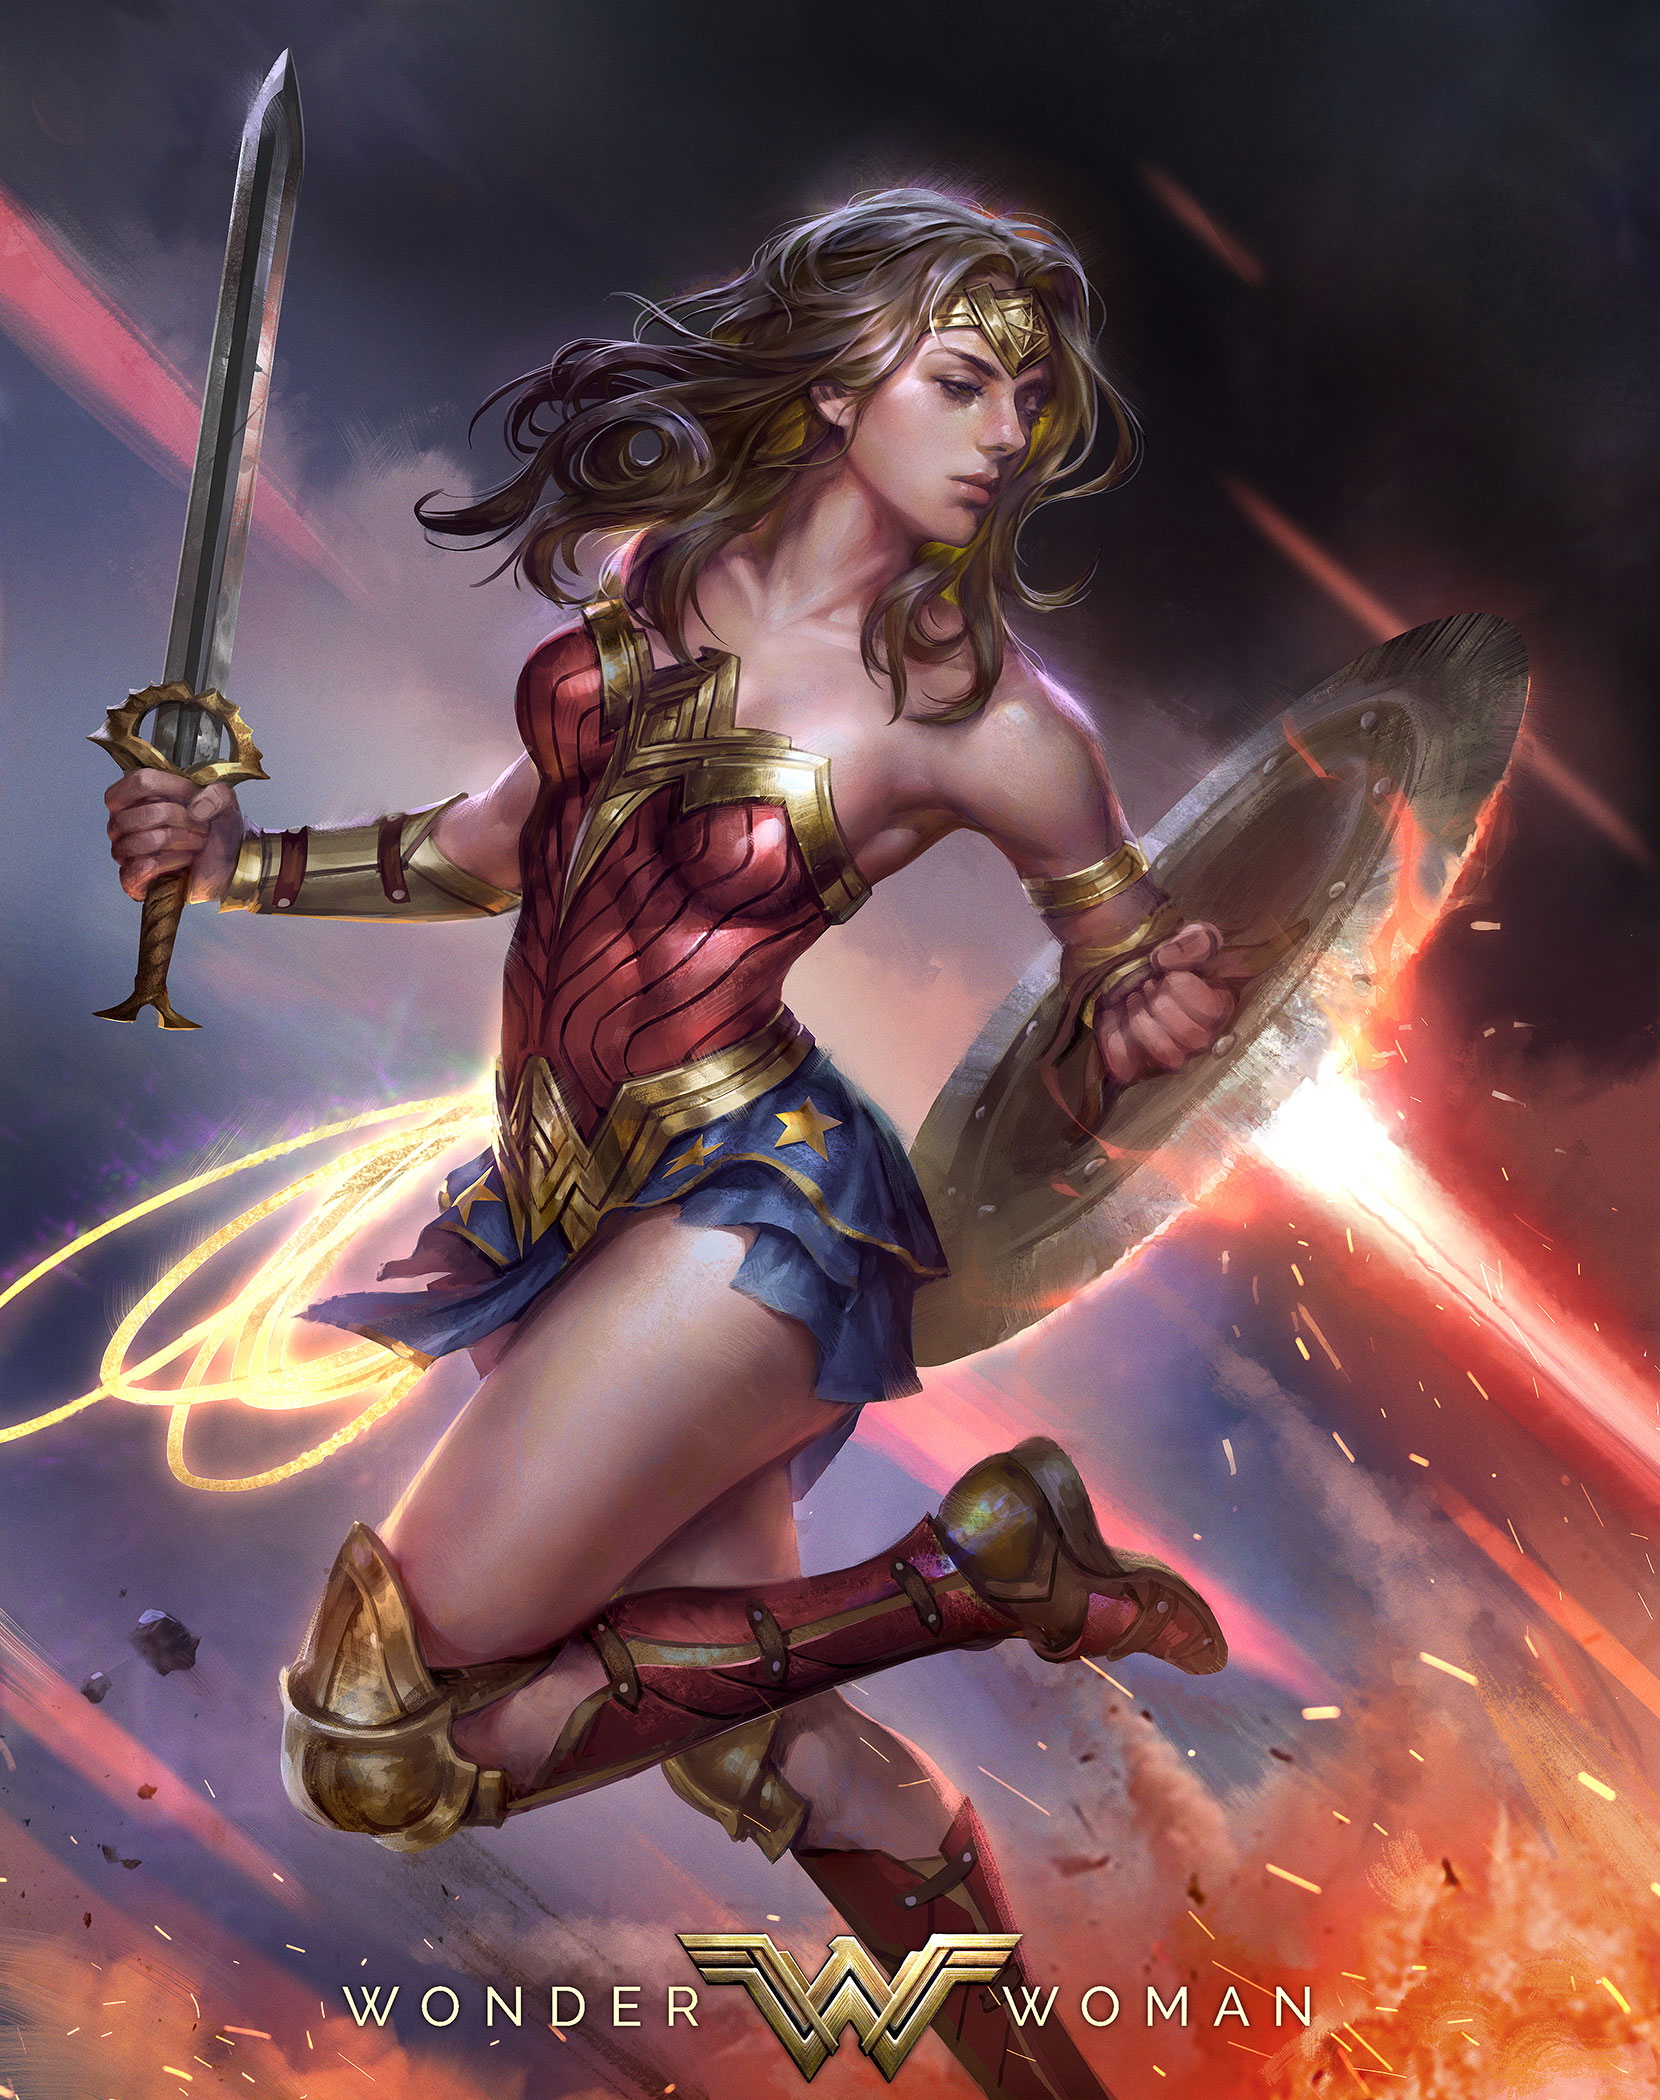 General 1660x2100 artwork fantasy art fantasy girl fictional character Wonder Woman superheroines DC Comics sword shield armor skirt figure-hugging armor